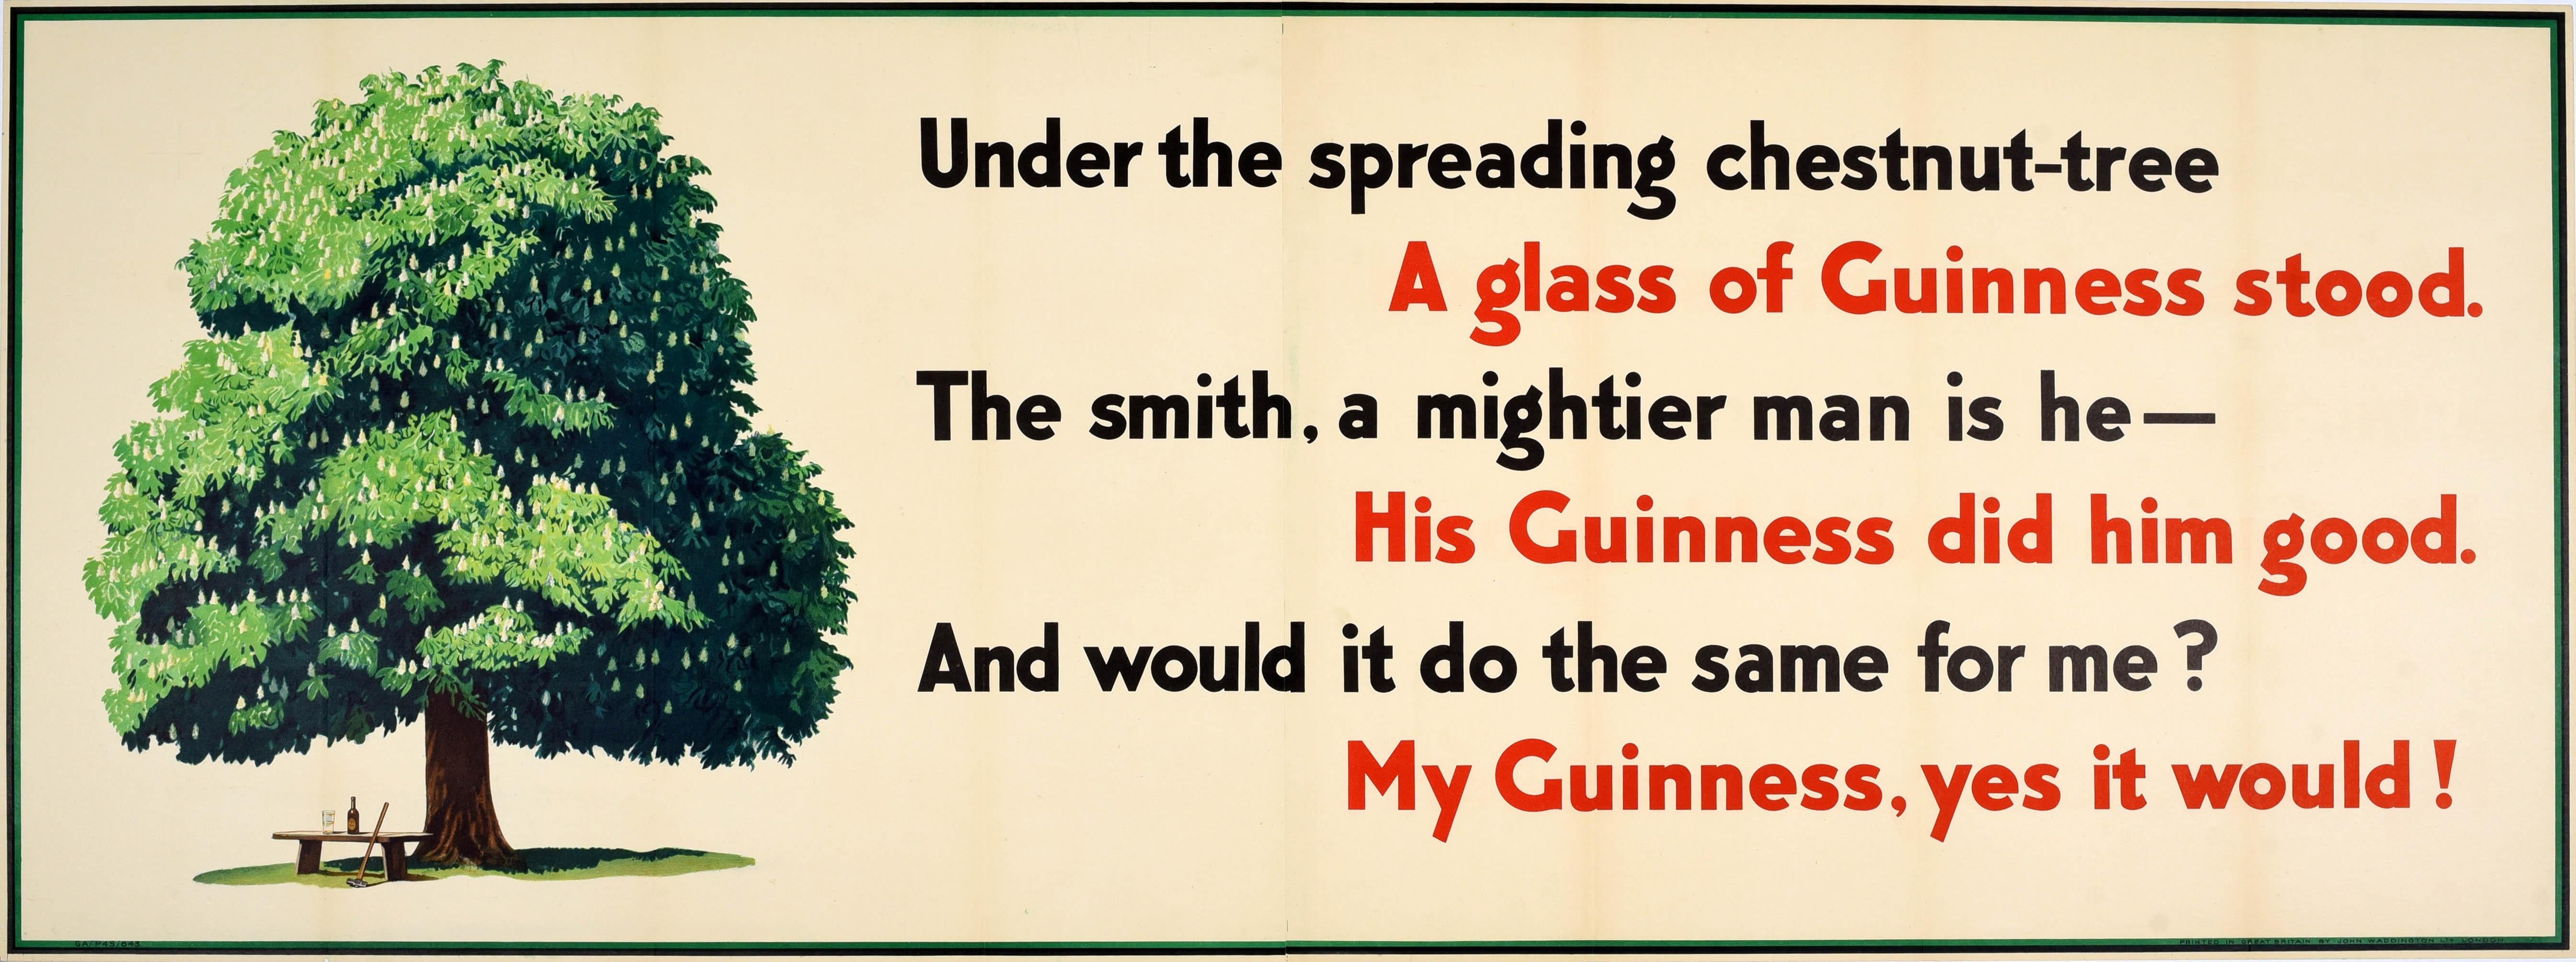 Unknown Print - Original Vintage Advertising Poster Guinness Chestnut Tree Irish Dry Stout Beer